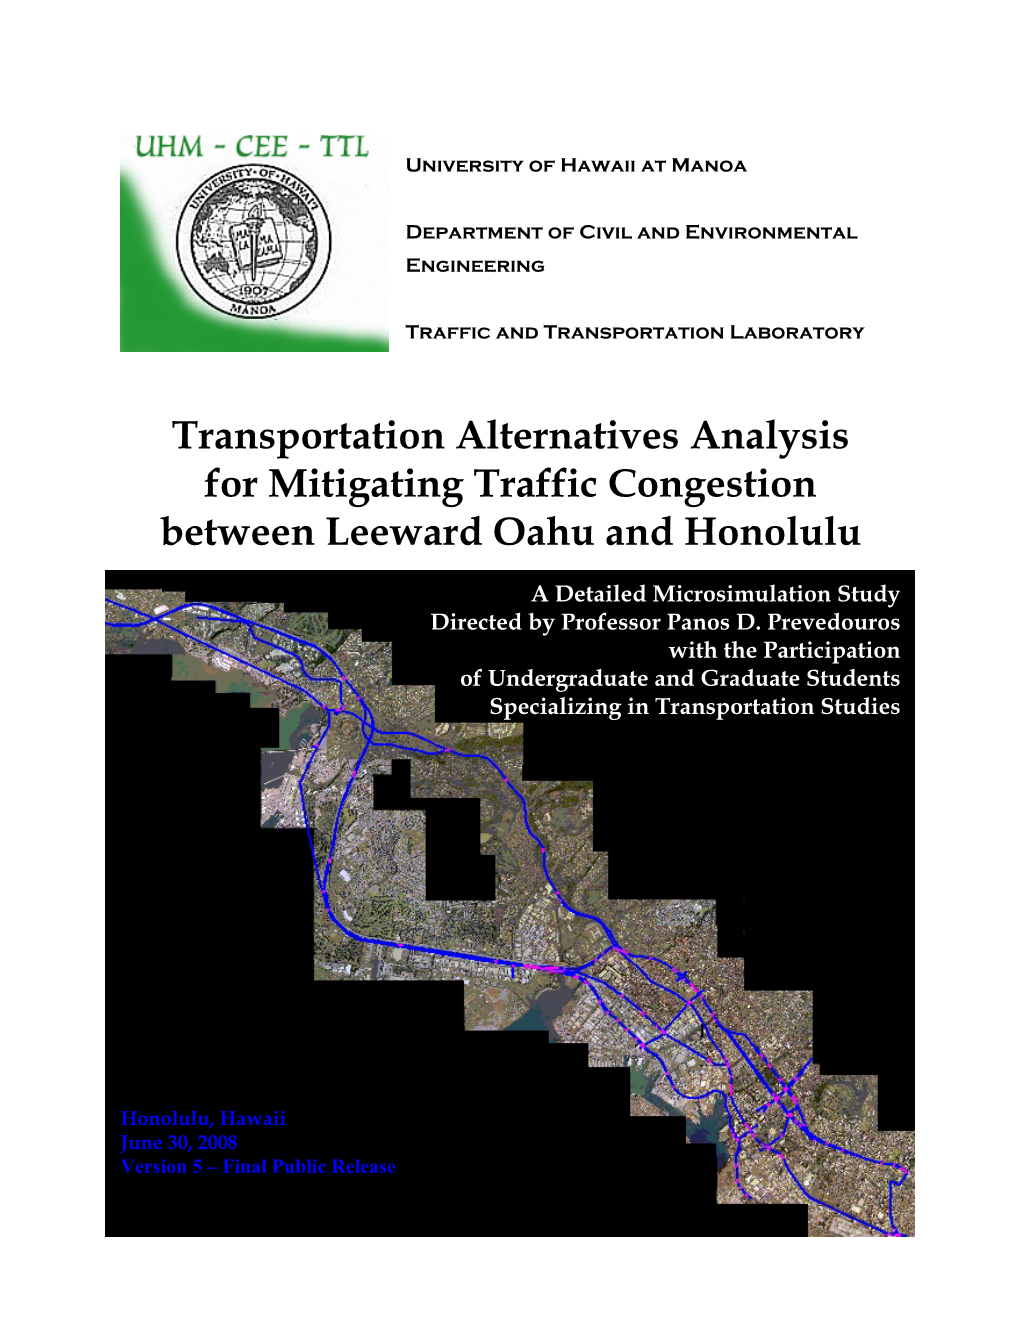 Transportation Alternatives Analysis for Mitigating Traffic Congestion Between Leeward Oahu and Honolulu